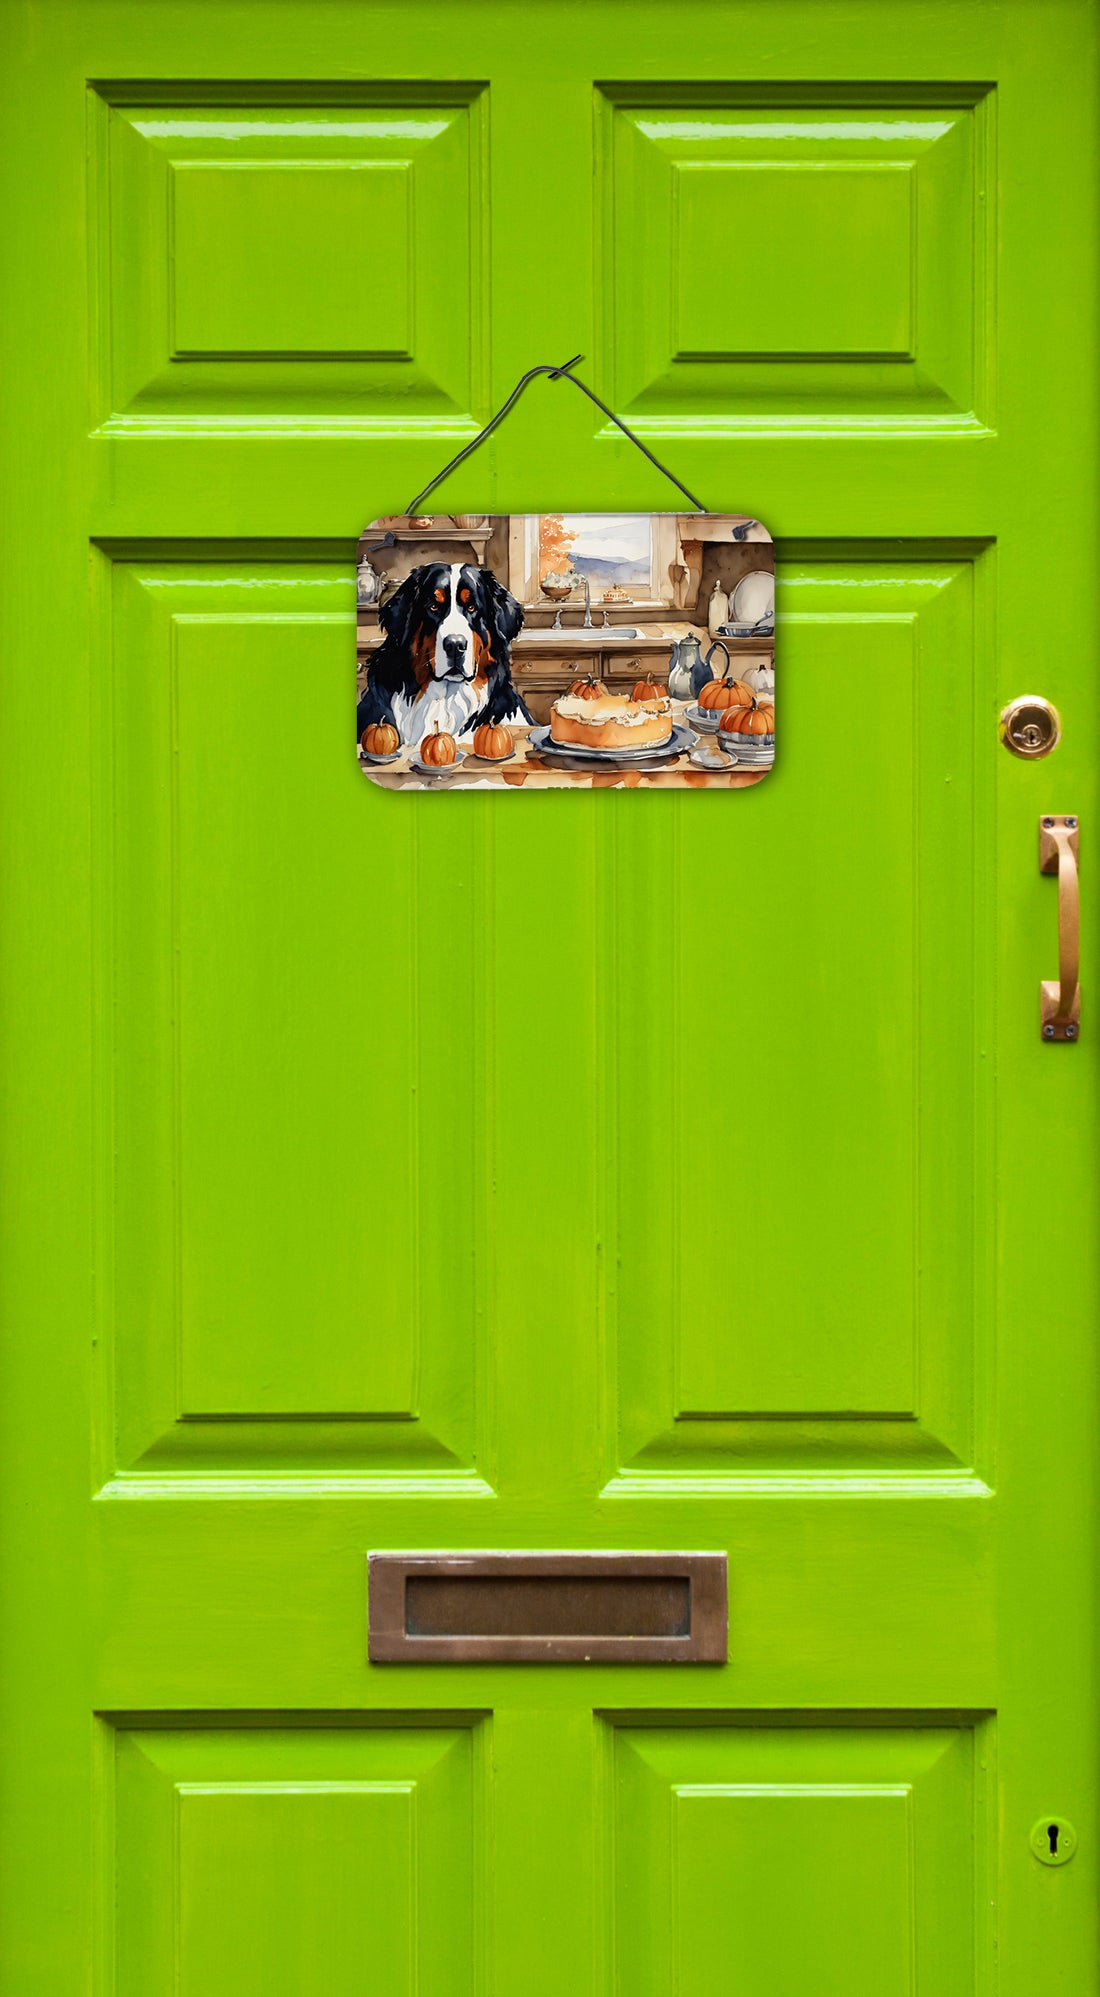 Buy this Bernese Mountain Dog Fall Kitchen Pumpkins Wall or Door Hanging Prints